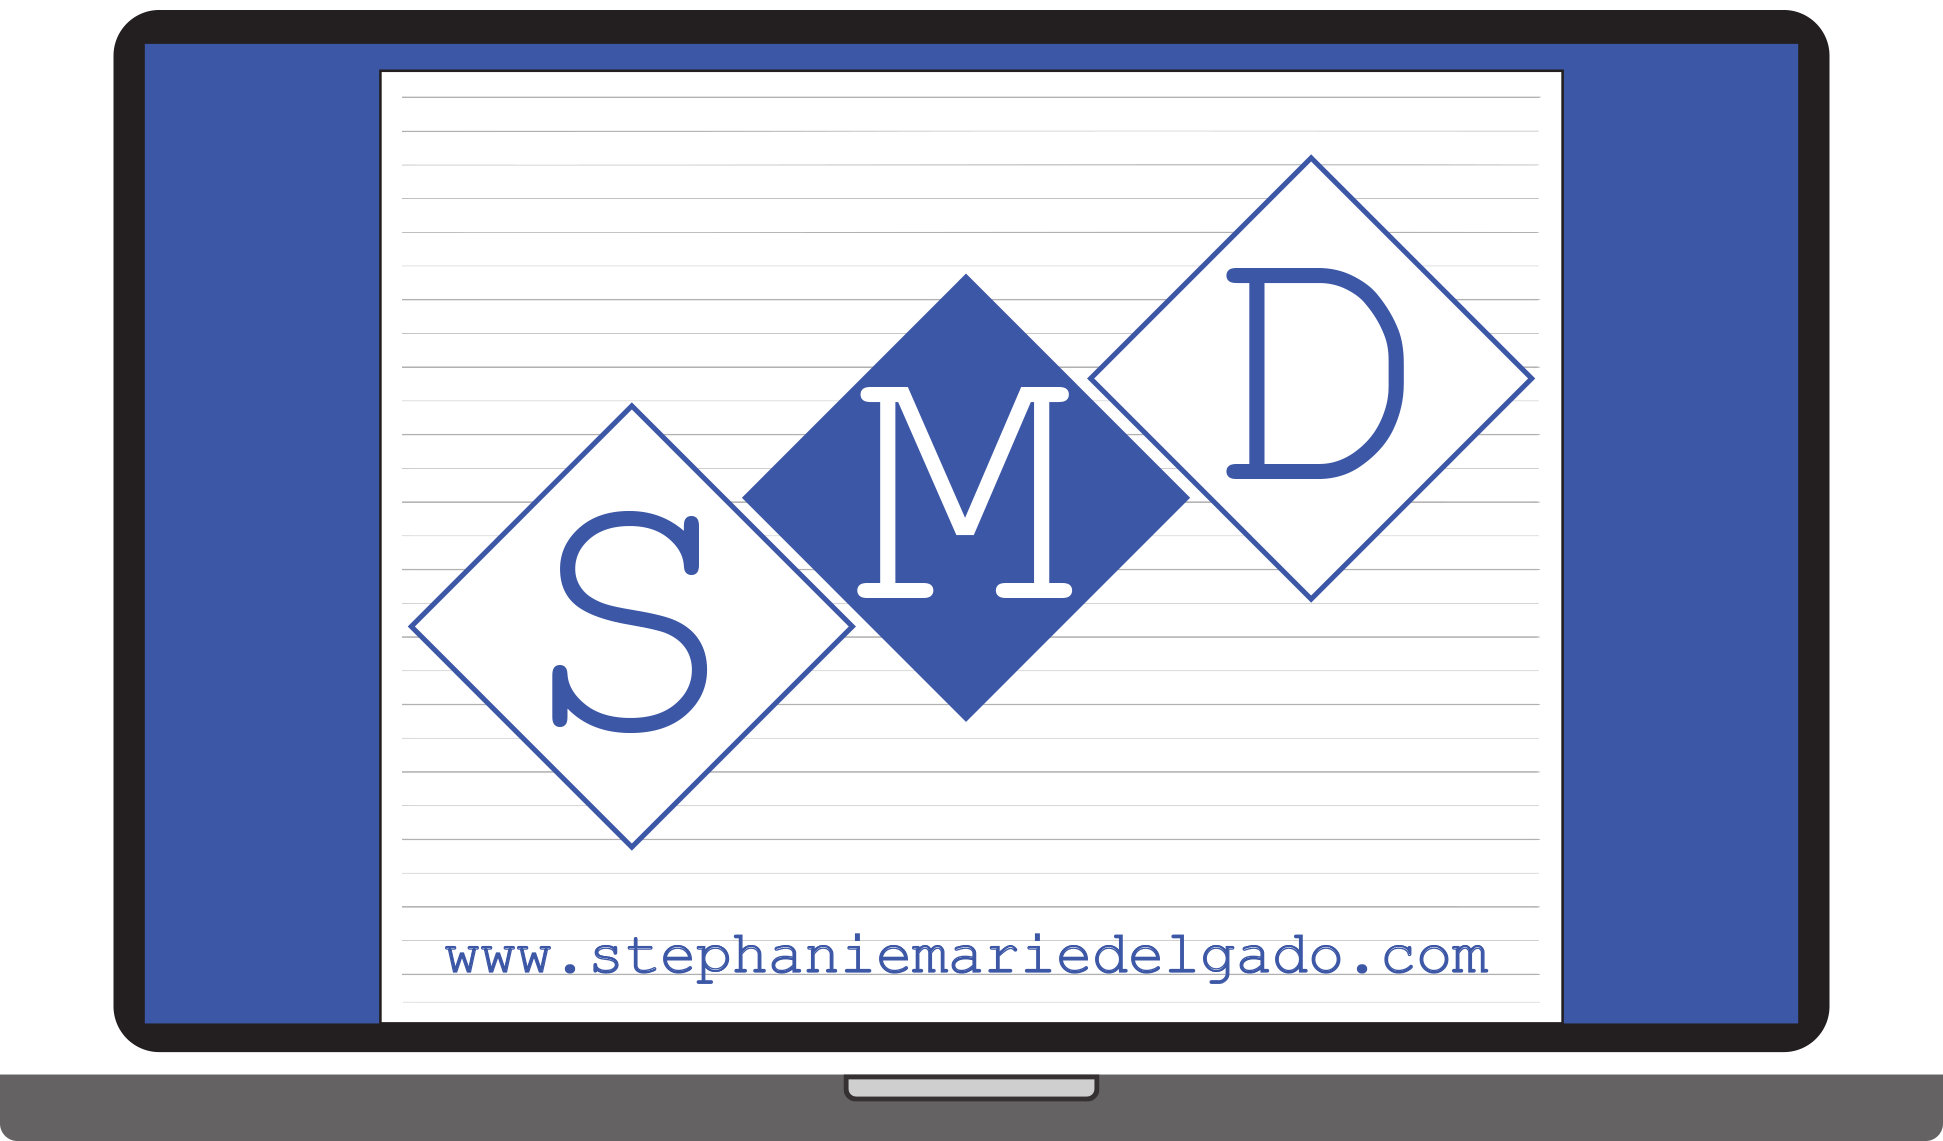 SMD writing, content strategy, web development and SEO near me NY, NJ